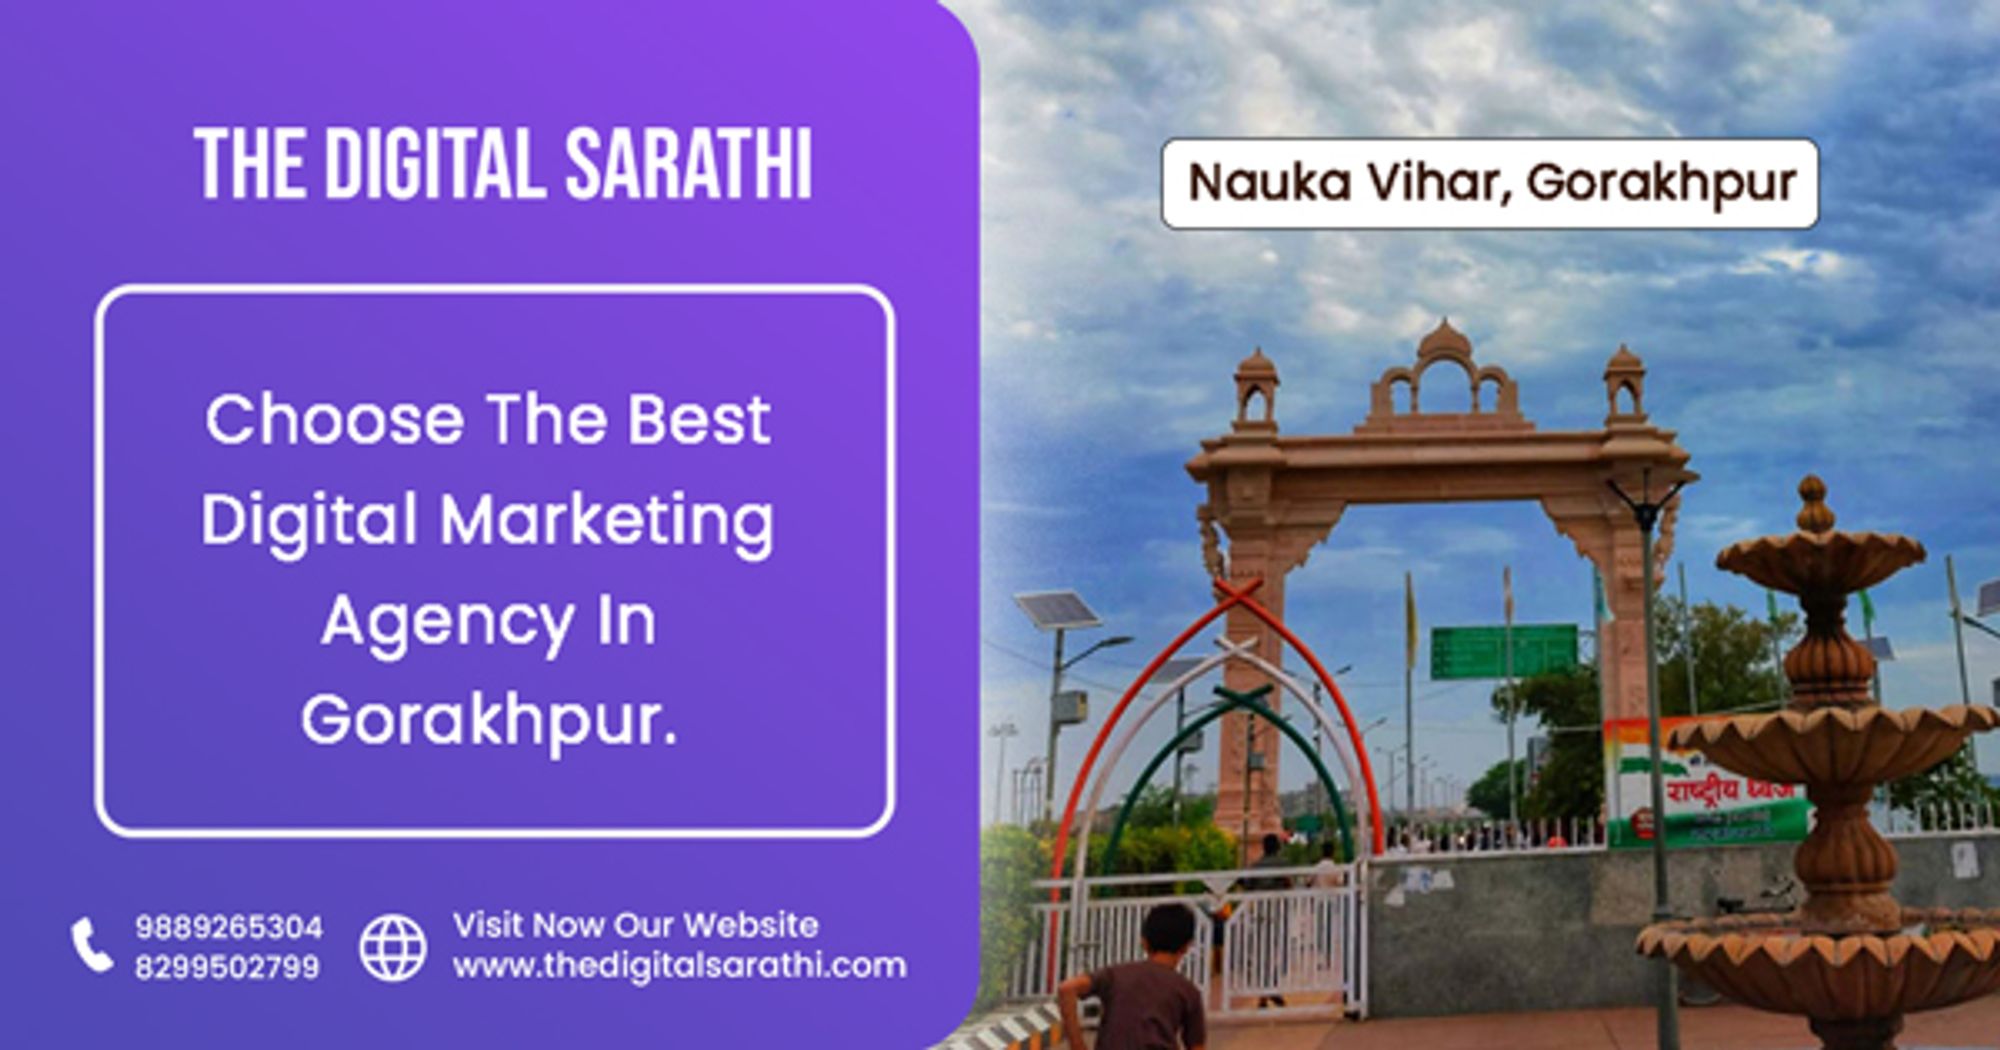 Choose the Best Digital Marketing Agency in Gorakhpur.